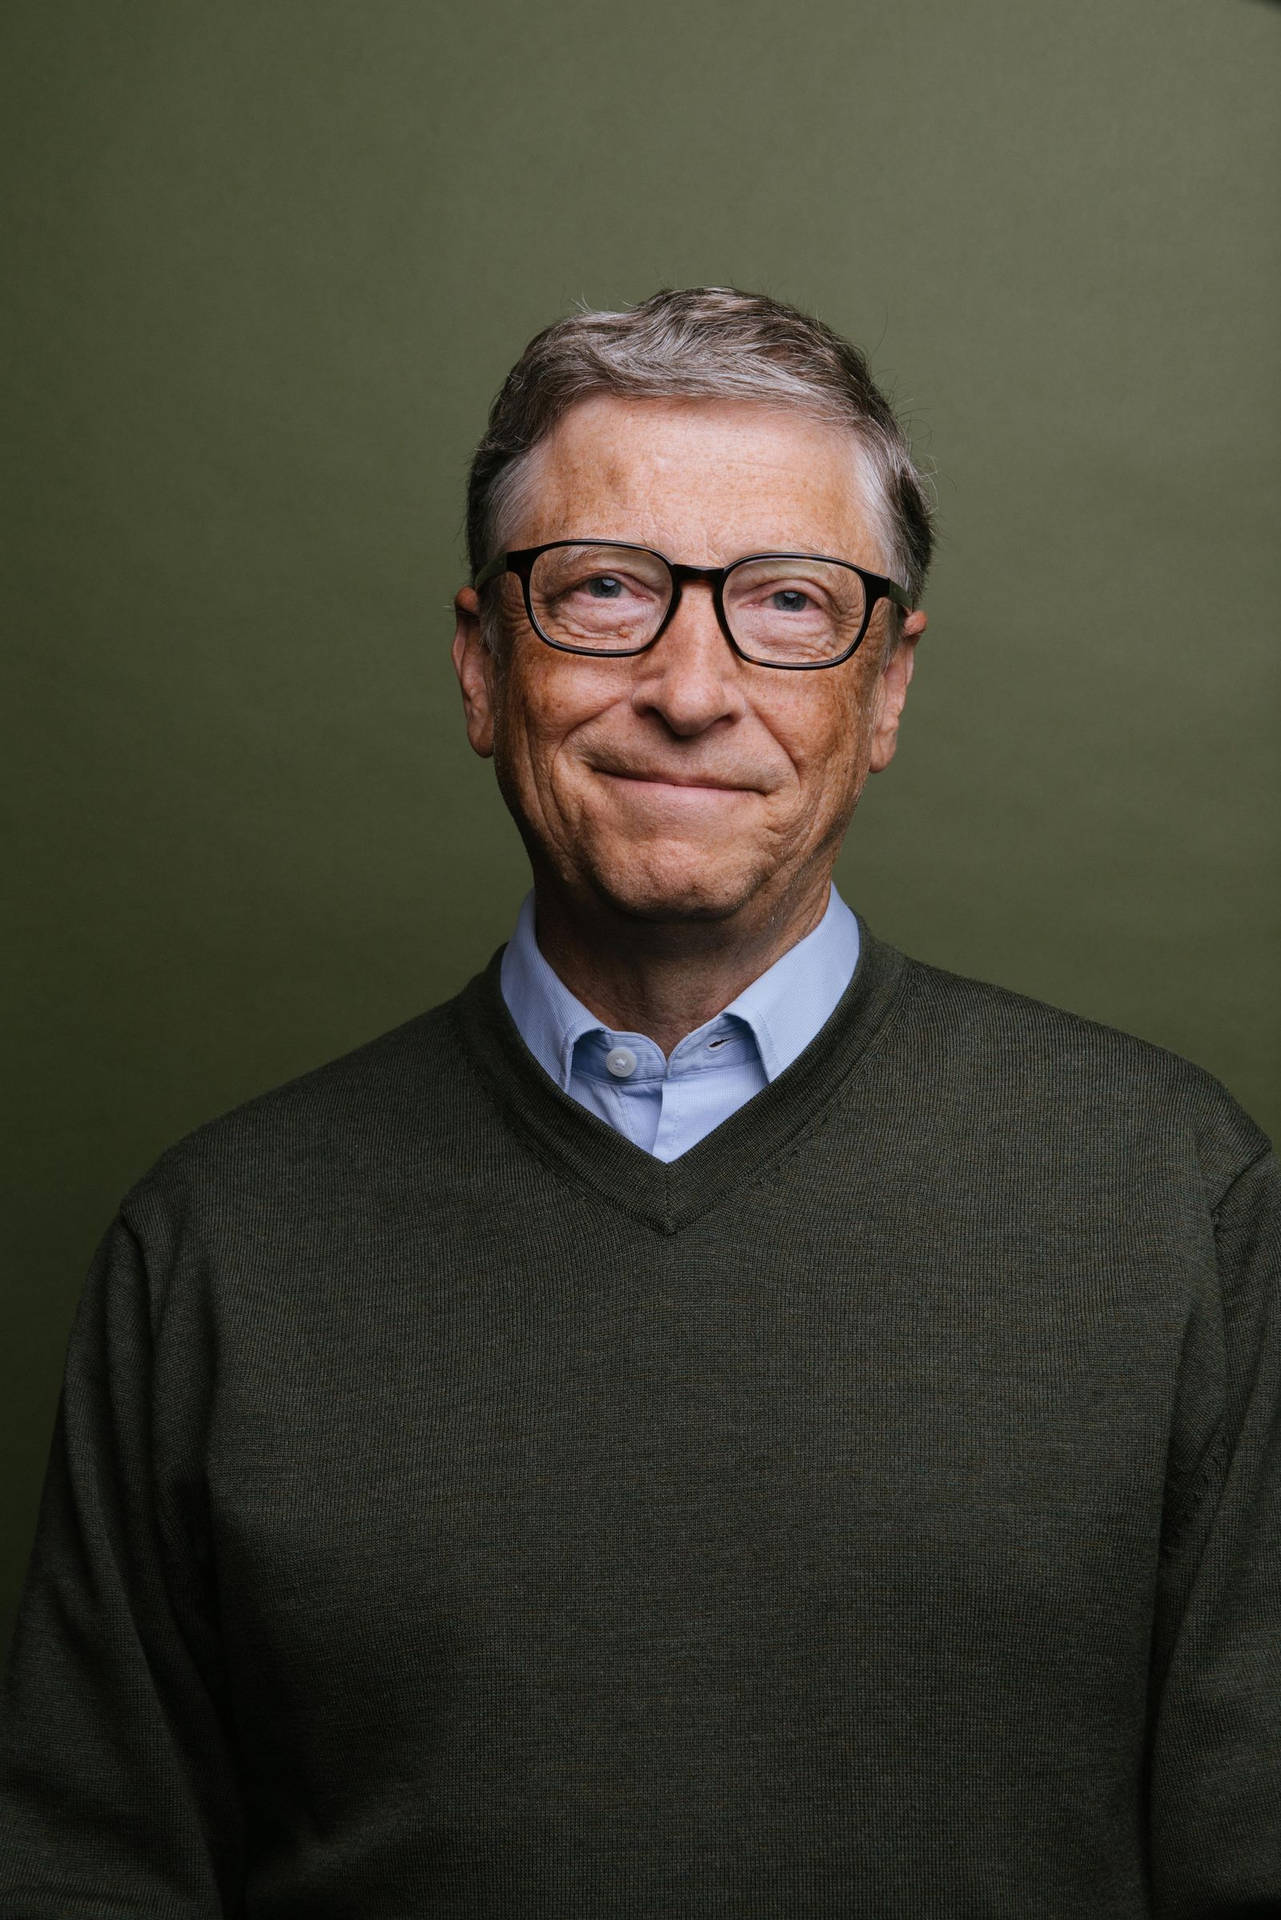 Bill Gates Photo Shoot